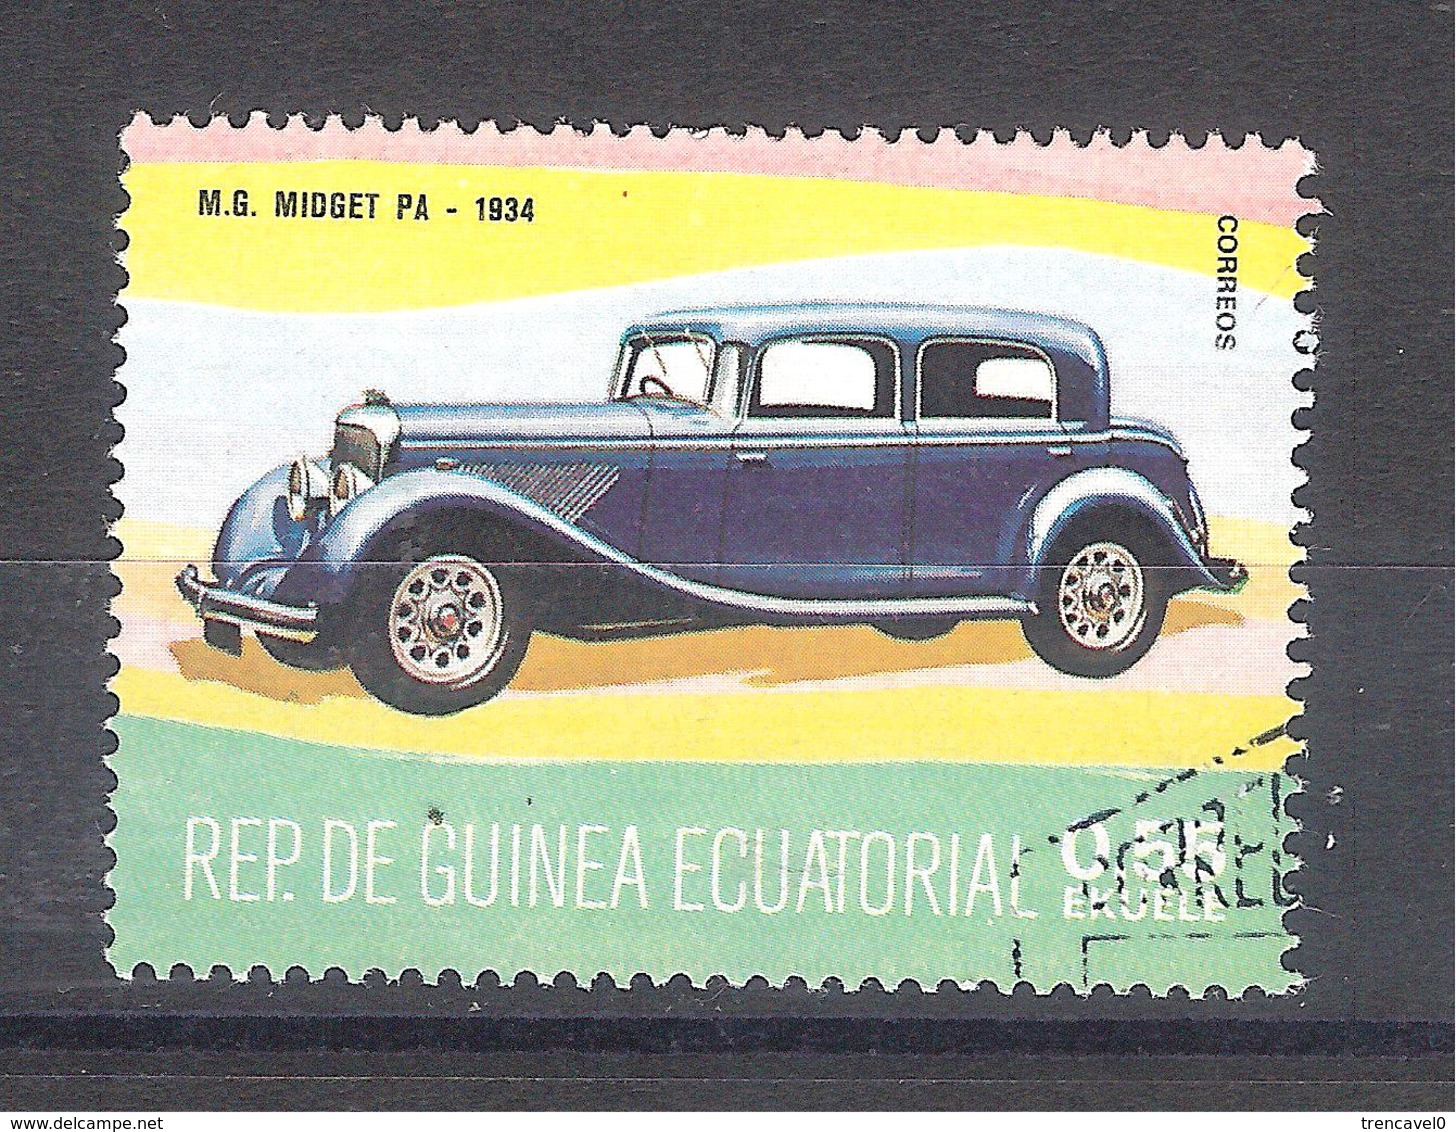 Guinea Ecuatorial 1977-Coches Antiguos MG MIdget Pa-1 Sello Usado - Guinea Ecuatorial